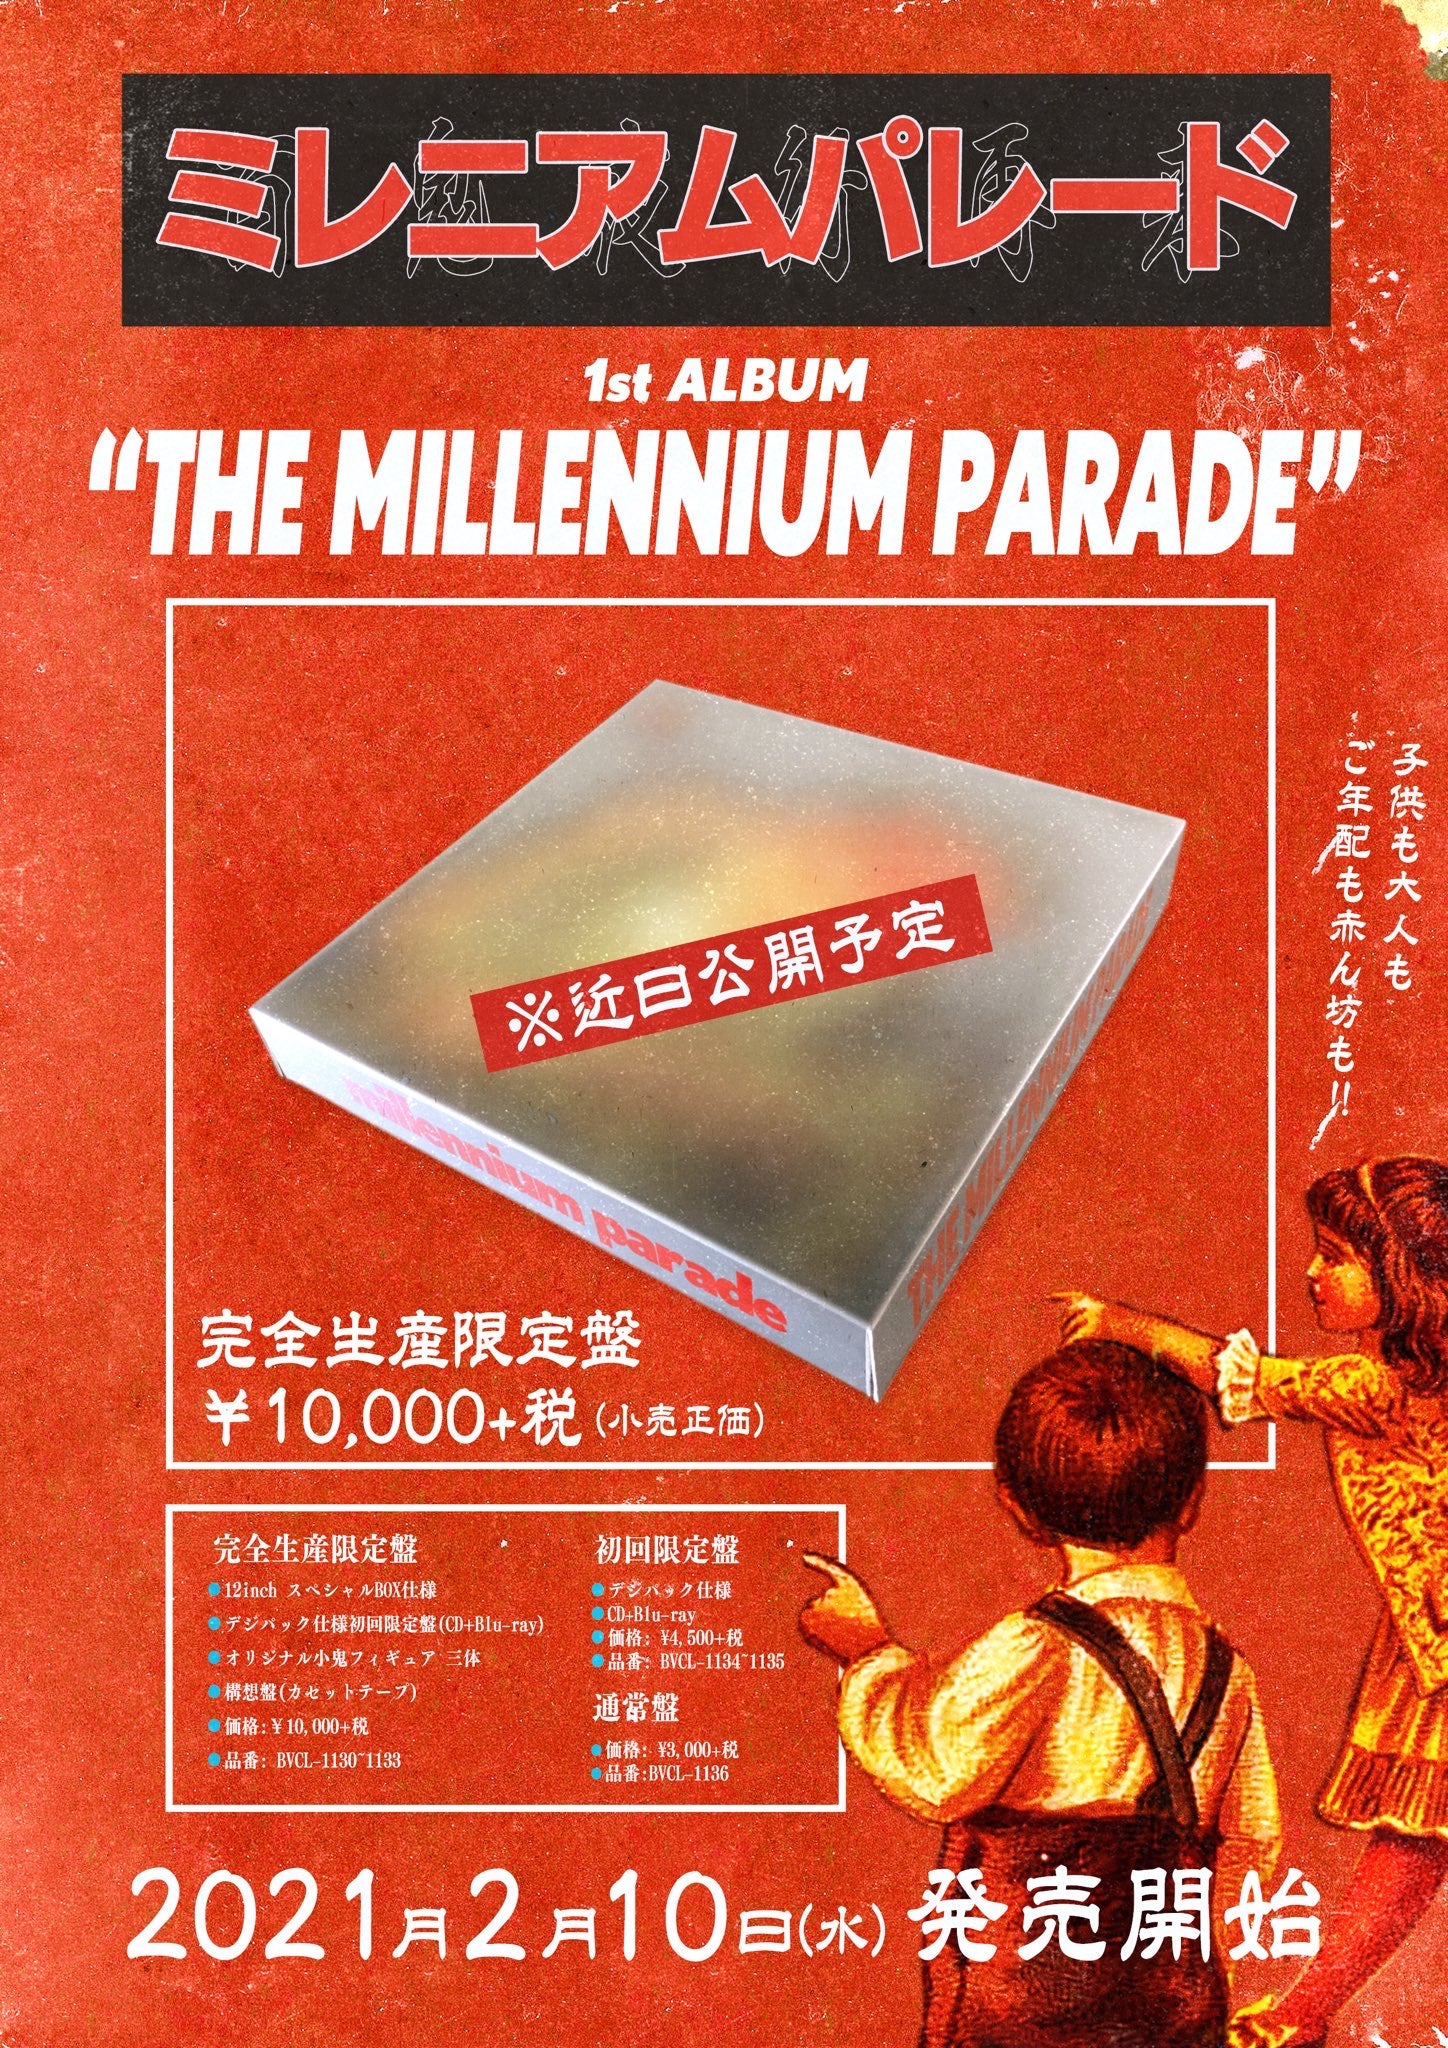 millennium parade『THE MILLENNIUM PARADE』 | MY HALE